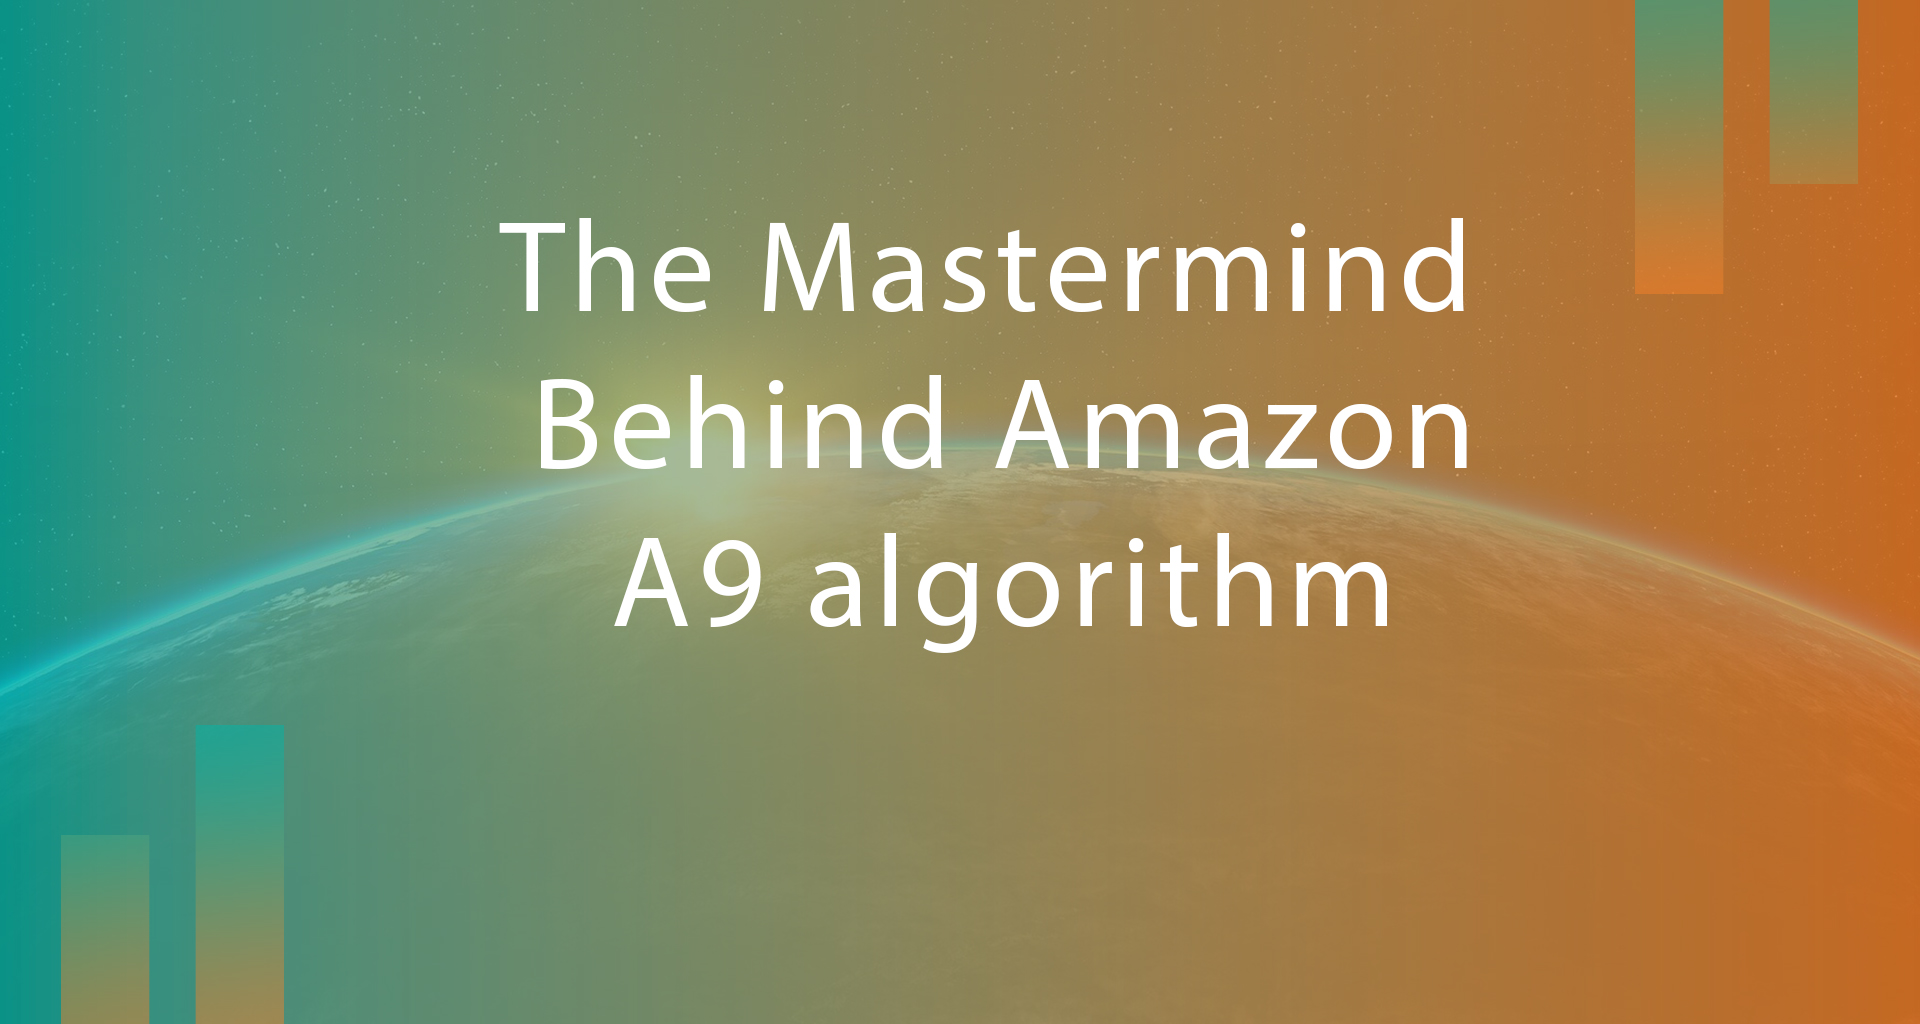 Amazon SEO – The mastermind behind Amazon – A9 algorithm